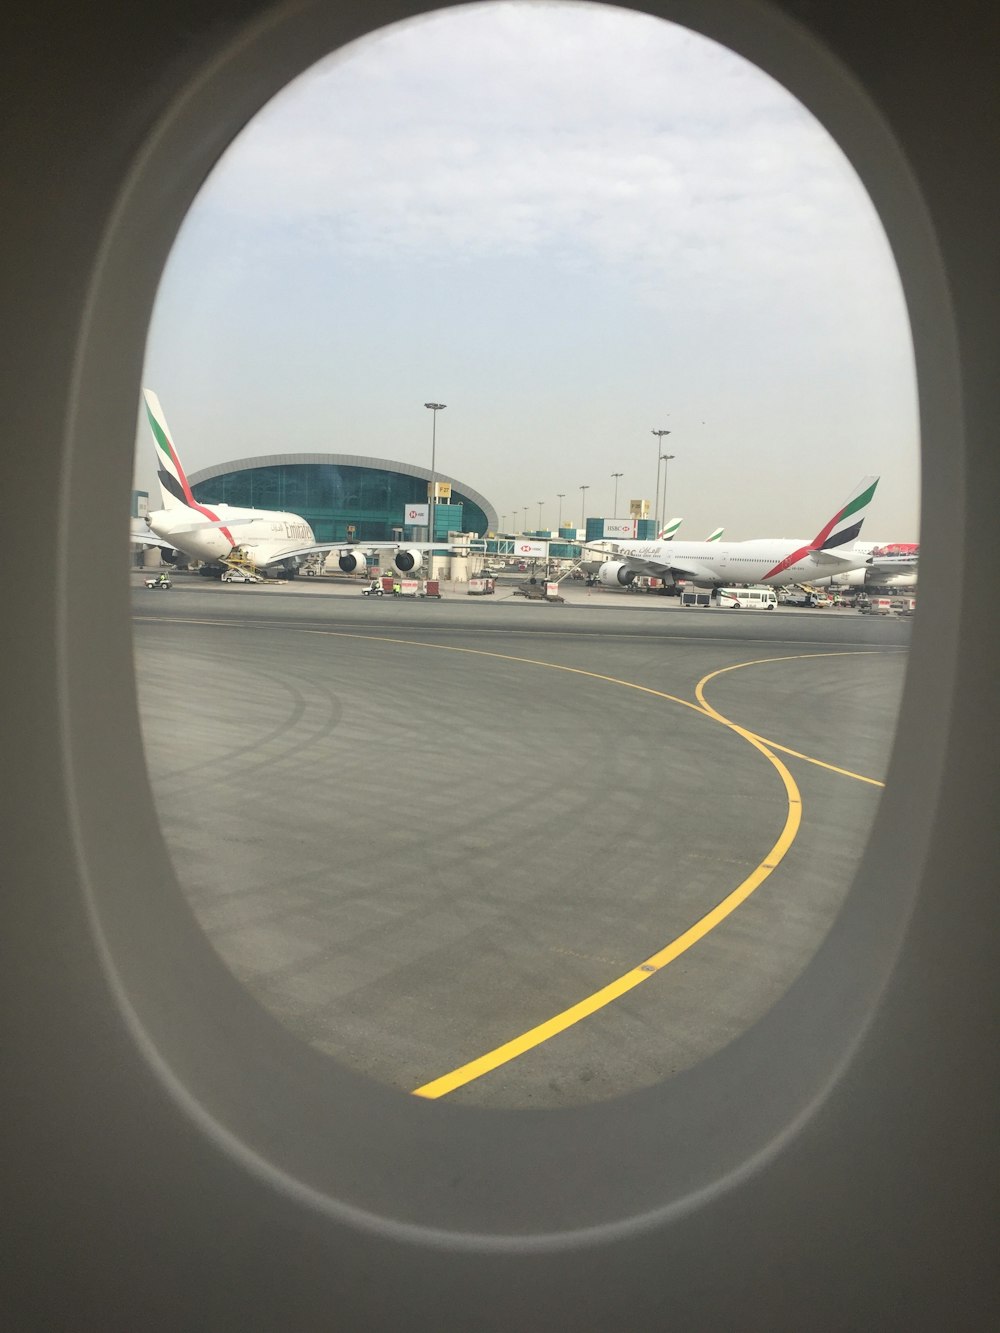 550+ Dubai Airport Pictures | Download Free Images on Unsplash